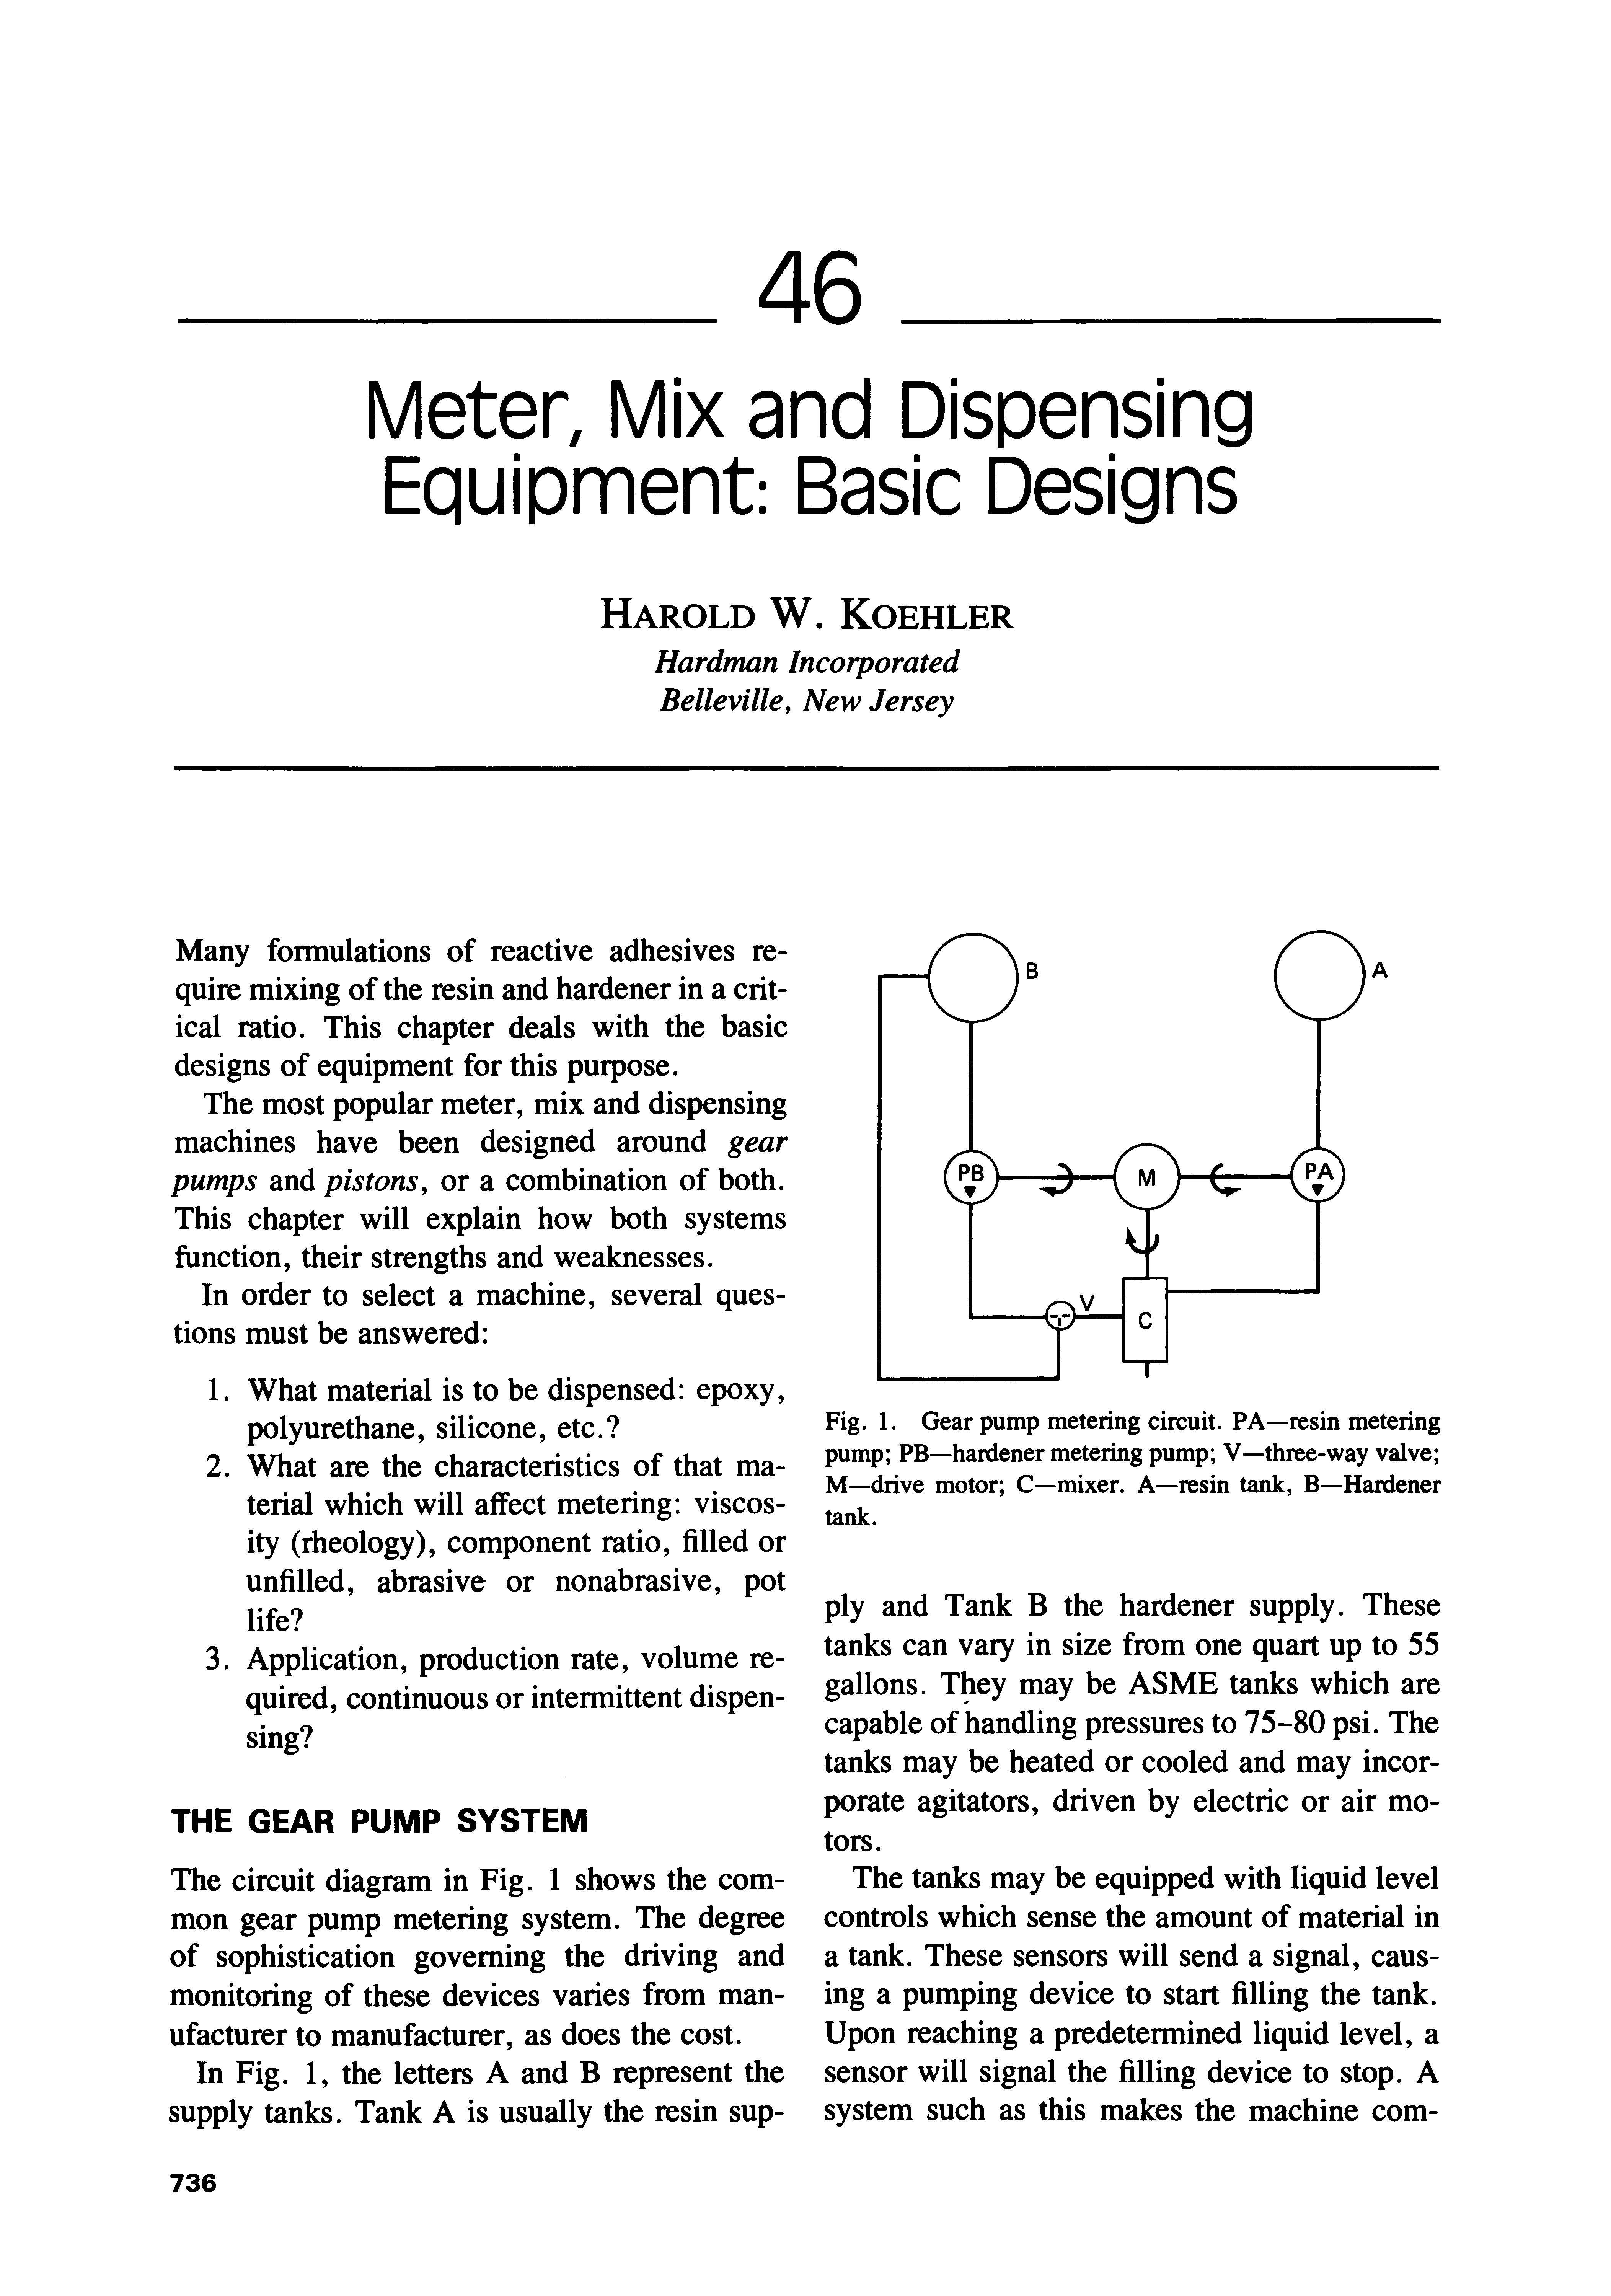 Fig. 1. Gear pump metering circuit. PA—resin metering pump PB—hardener metering pump V—three-way valve M—drive motor C—mixer. A—resin tank, B—Hardener tank.